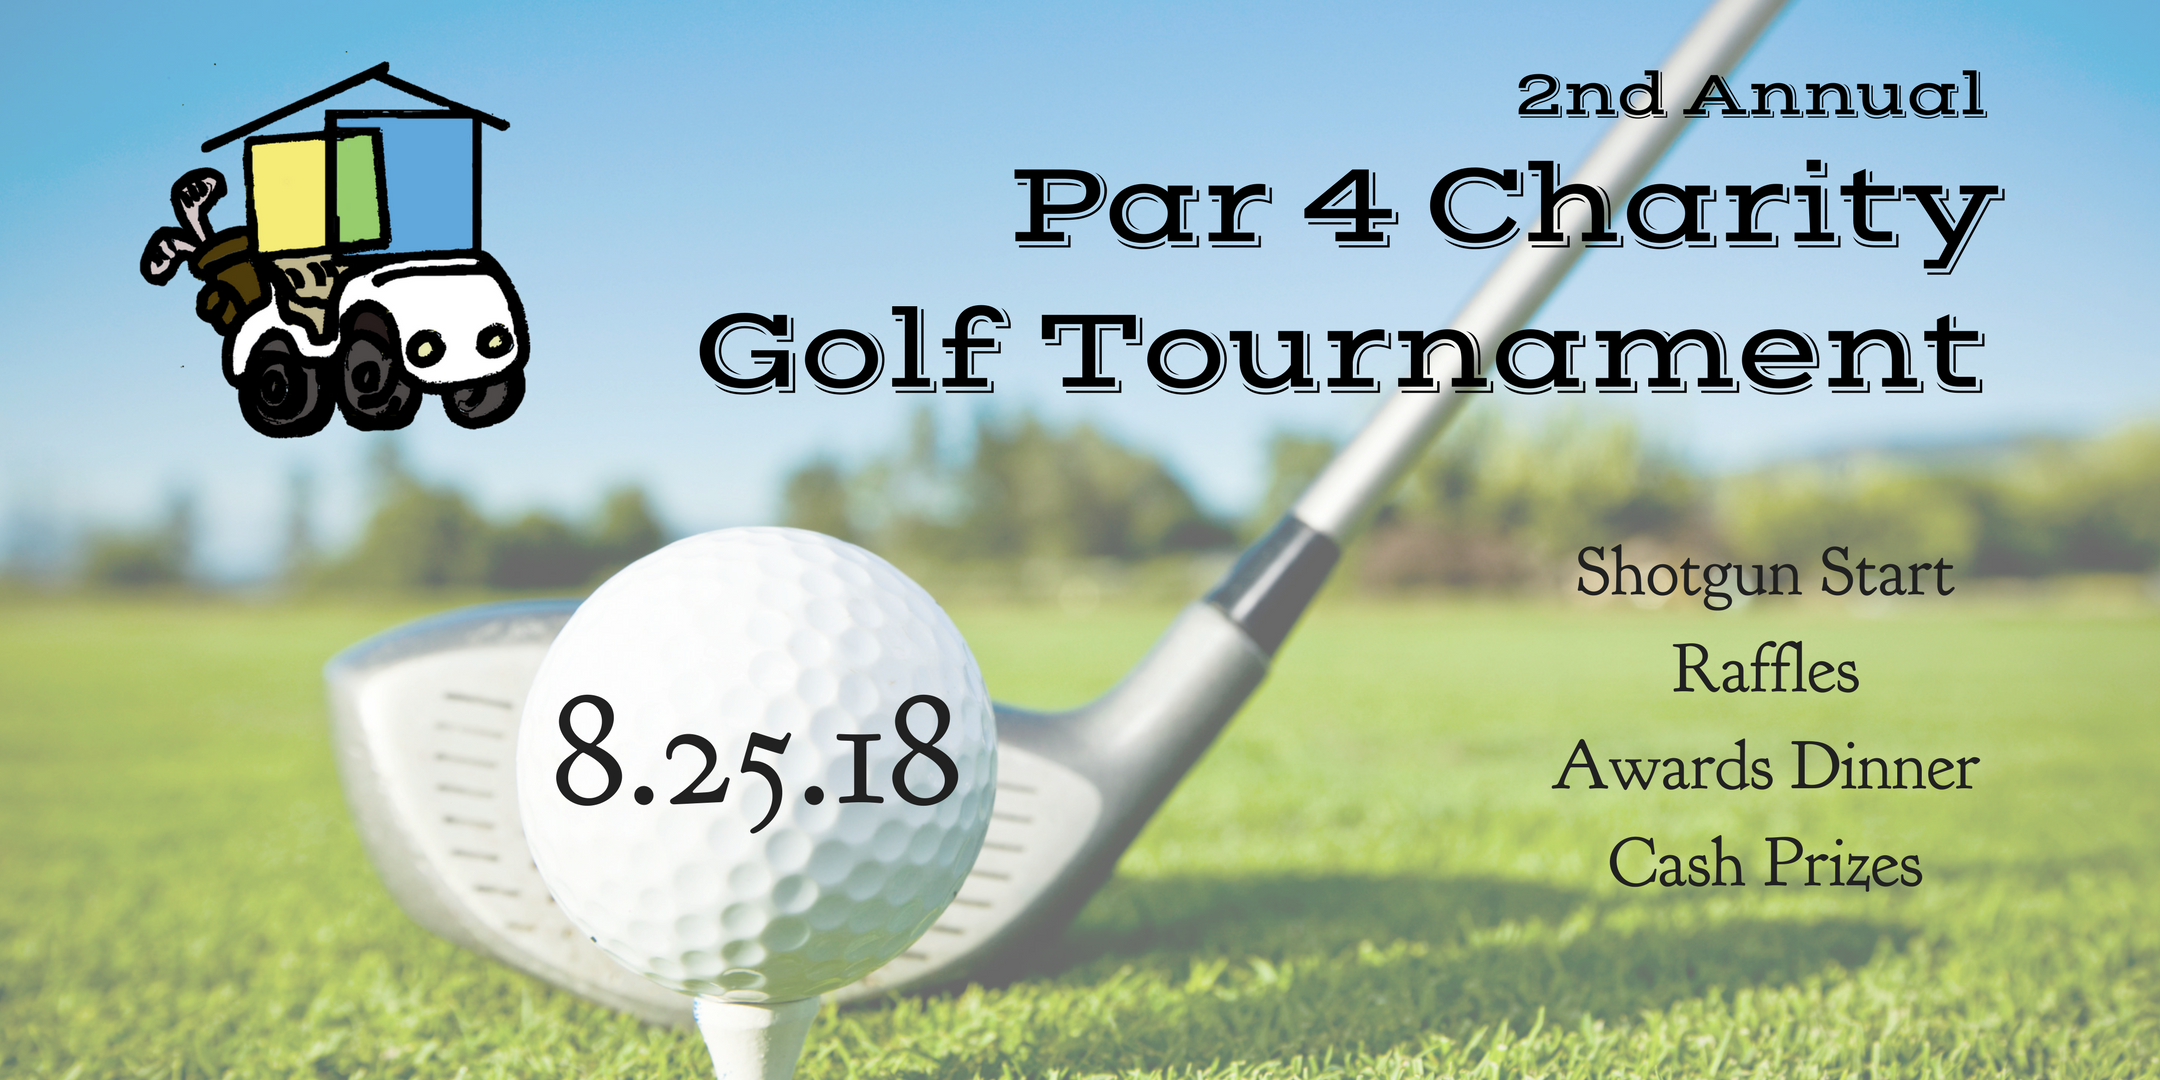 Reliance Health's 2nd Annual Par 4 Charity Golf Tournament